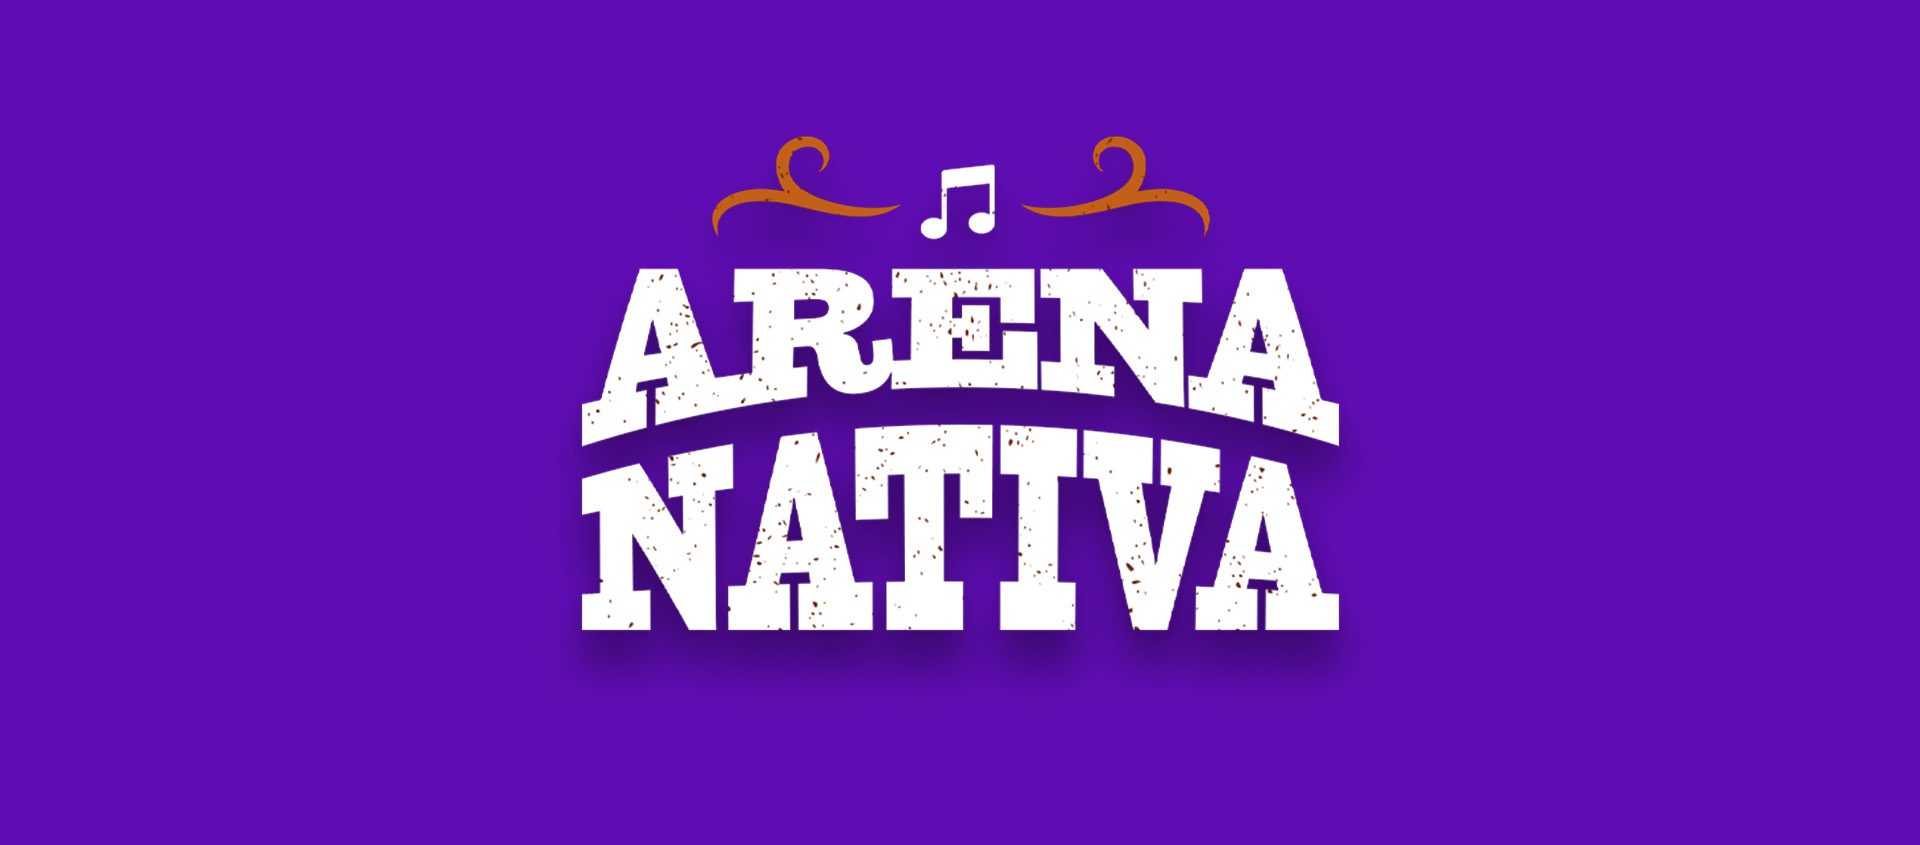 Arena Nativa